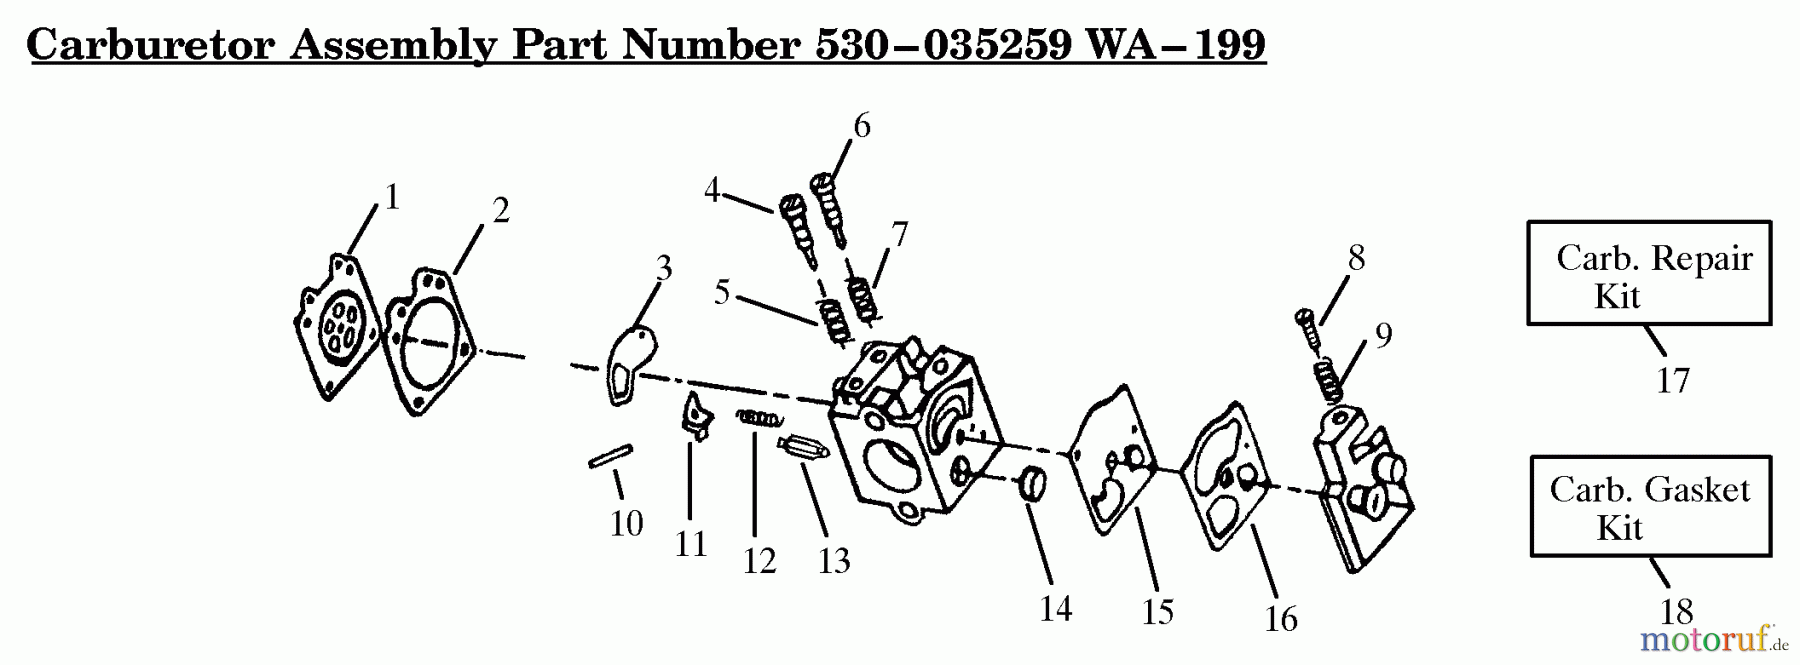  Poulan / Weed Eater Motorsensen, Trimmer HP22T - Weed Eater String Trimmer Carburetor Assembly (WA199) P/N 530035259